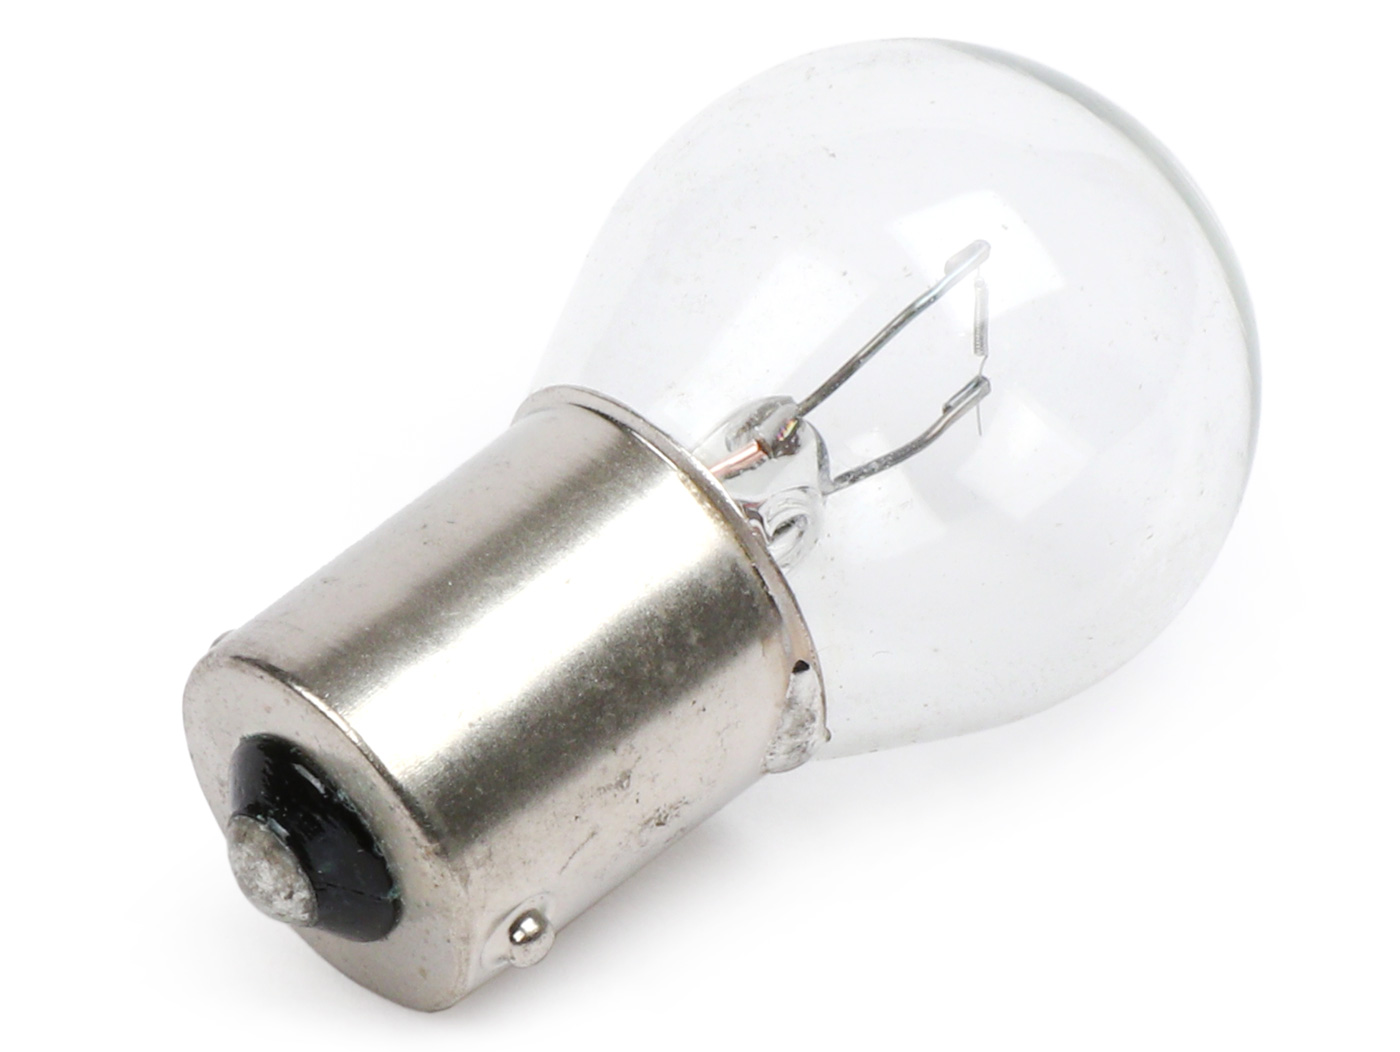 Bulb 6V 2W Ba9s Bulb Lamp Taillight For Moped Moped Vintage